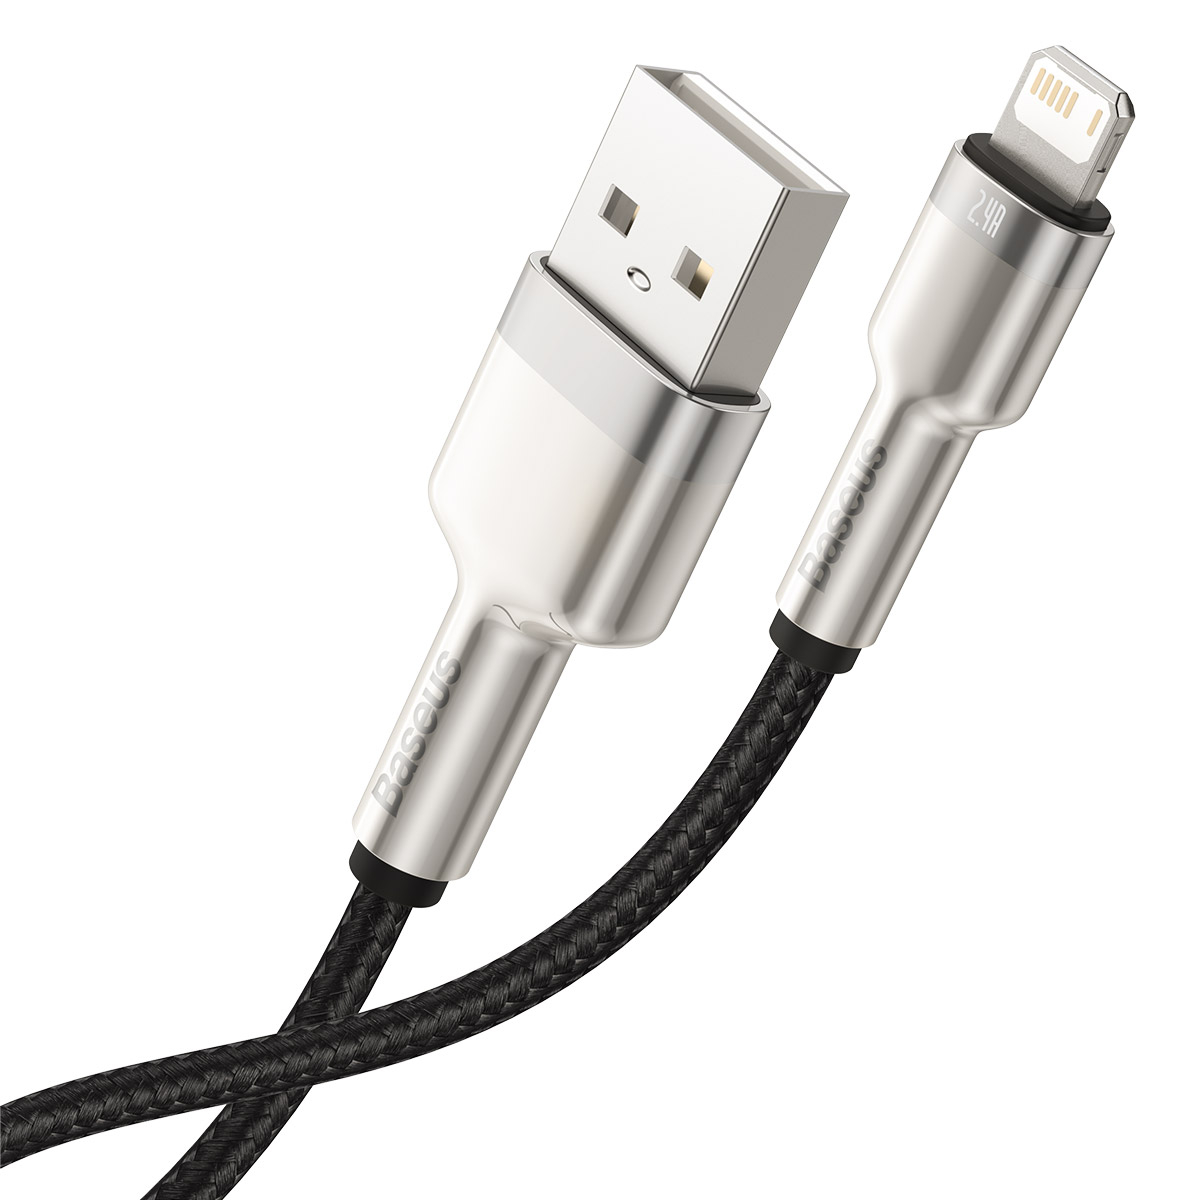 Baseus Cafule USB till Lightning datakabel, 2.4A, 1m, svart